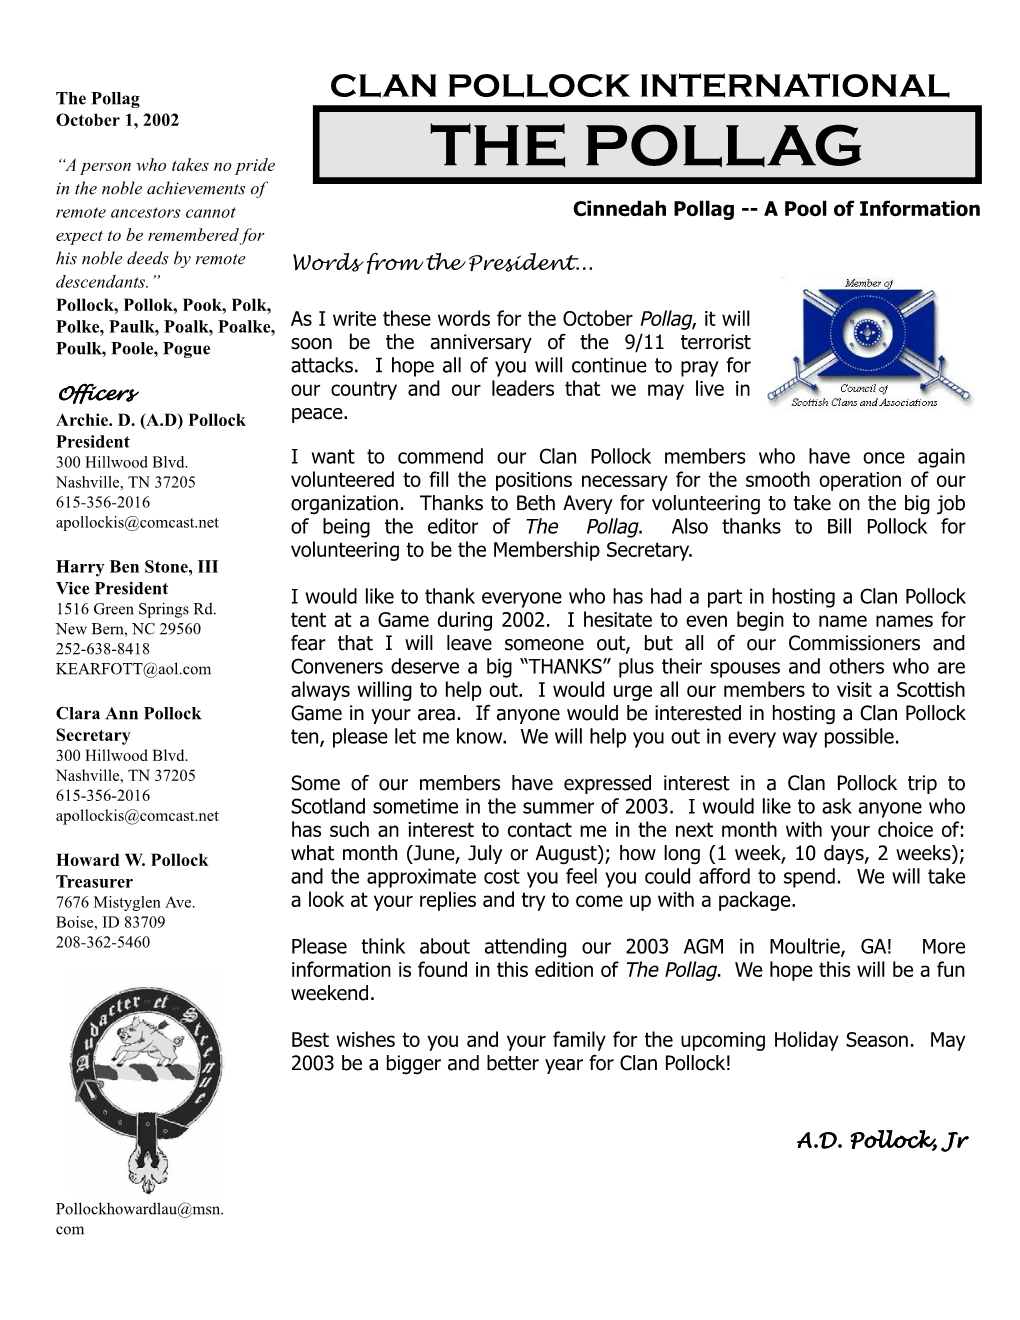 The Pollag CLAN POLLOCK INTERNATIONAL October 1, 2002